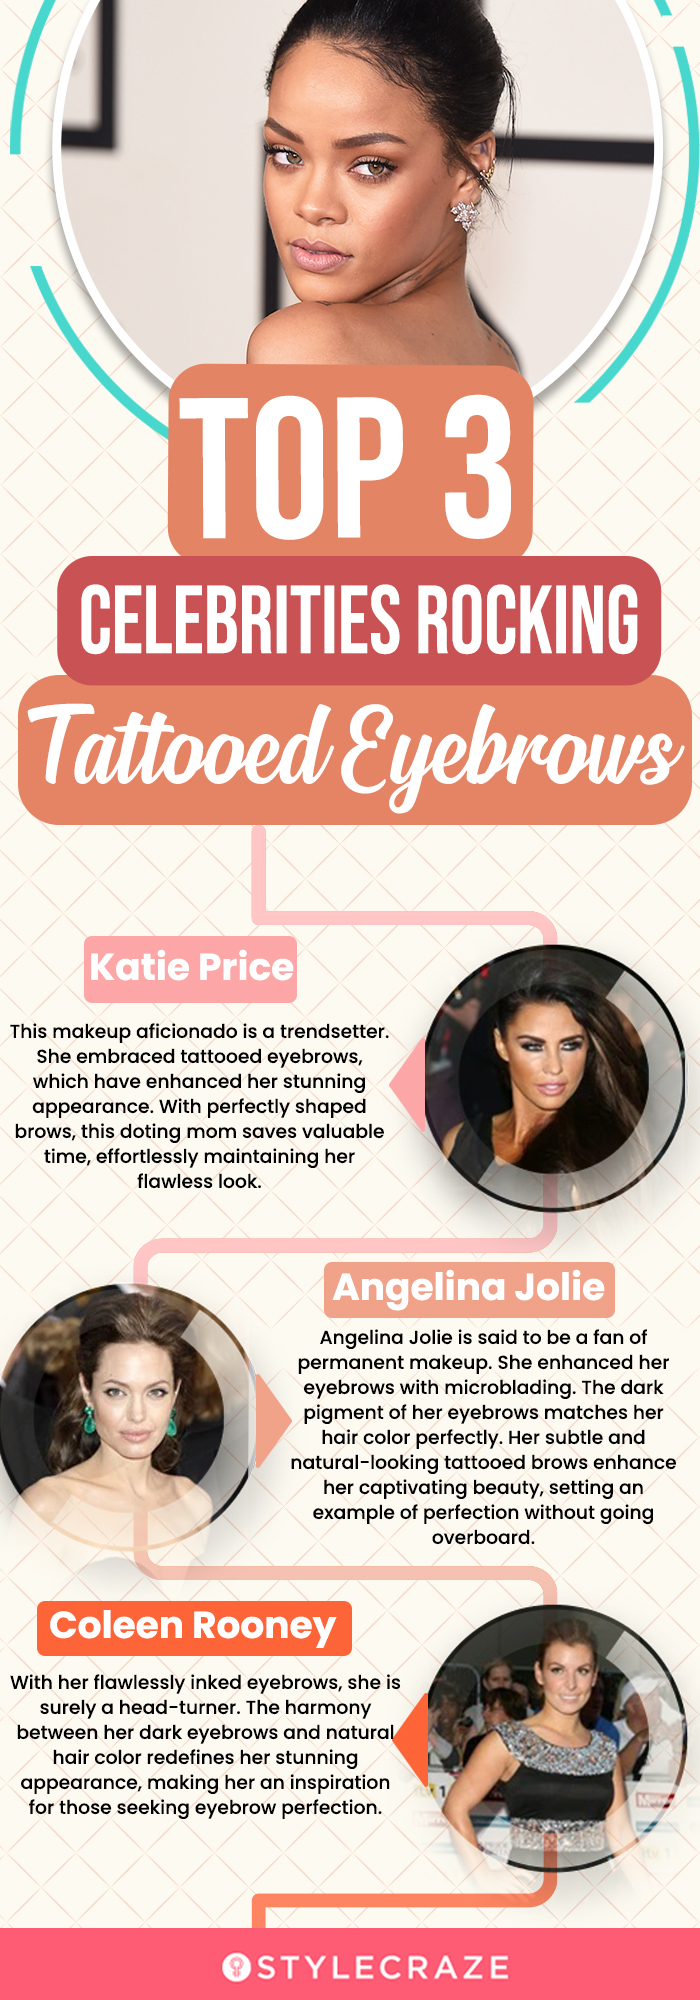 top 3 celebrities rocking tattooed eyebrows (infographic)